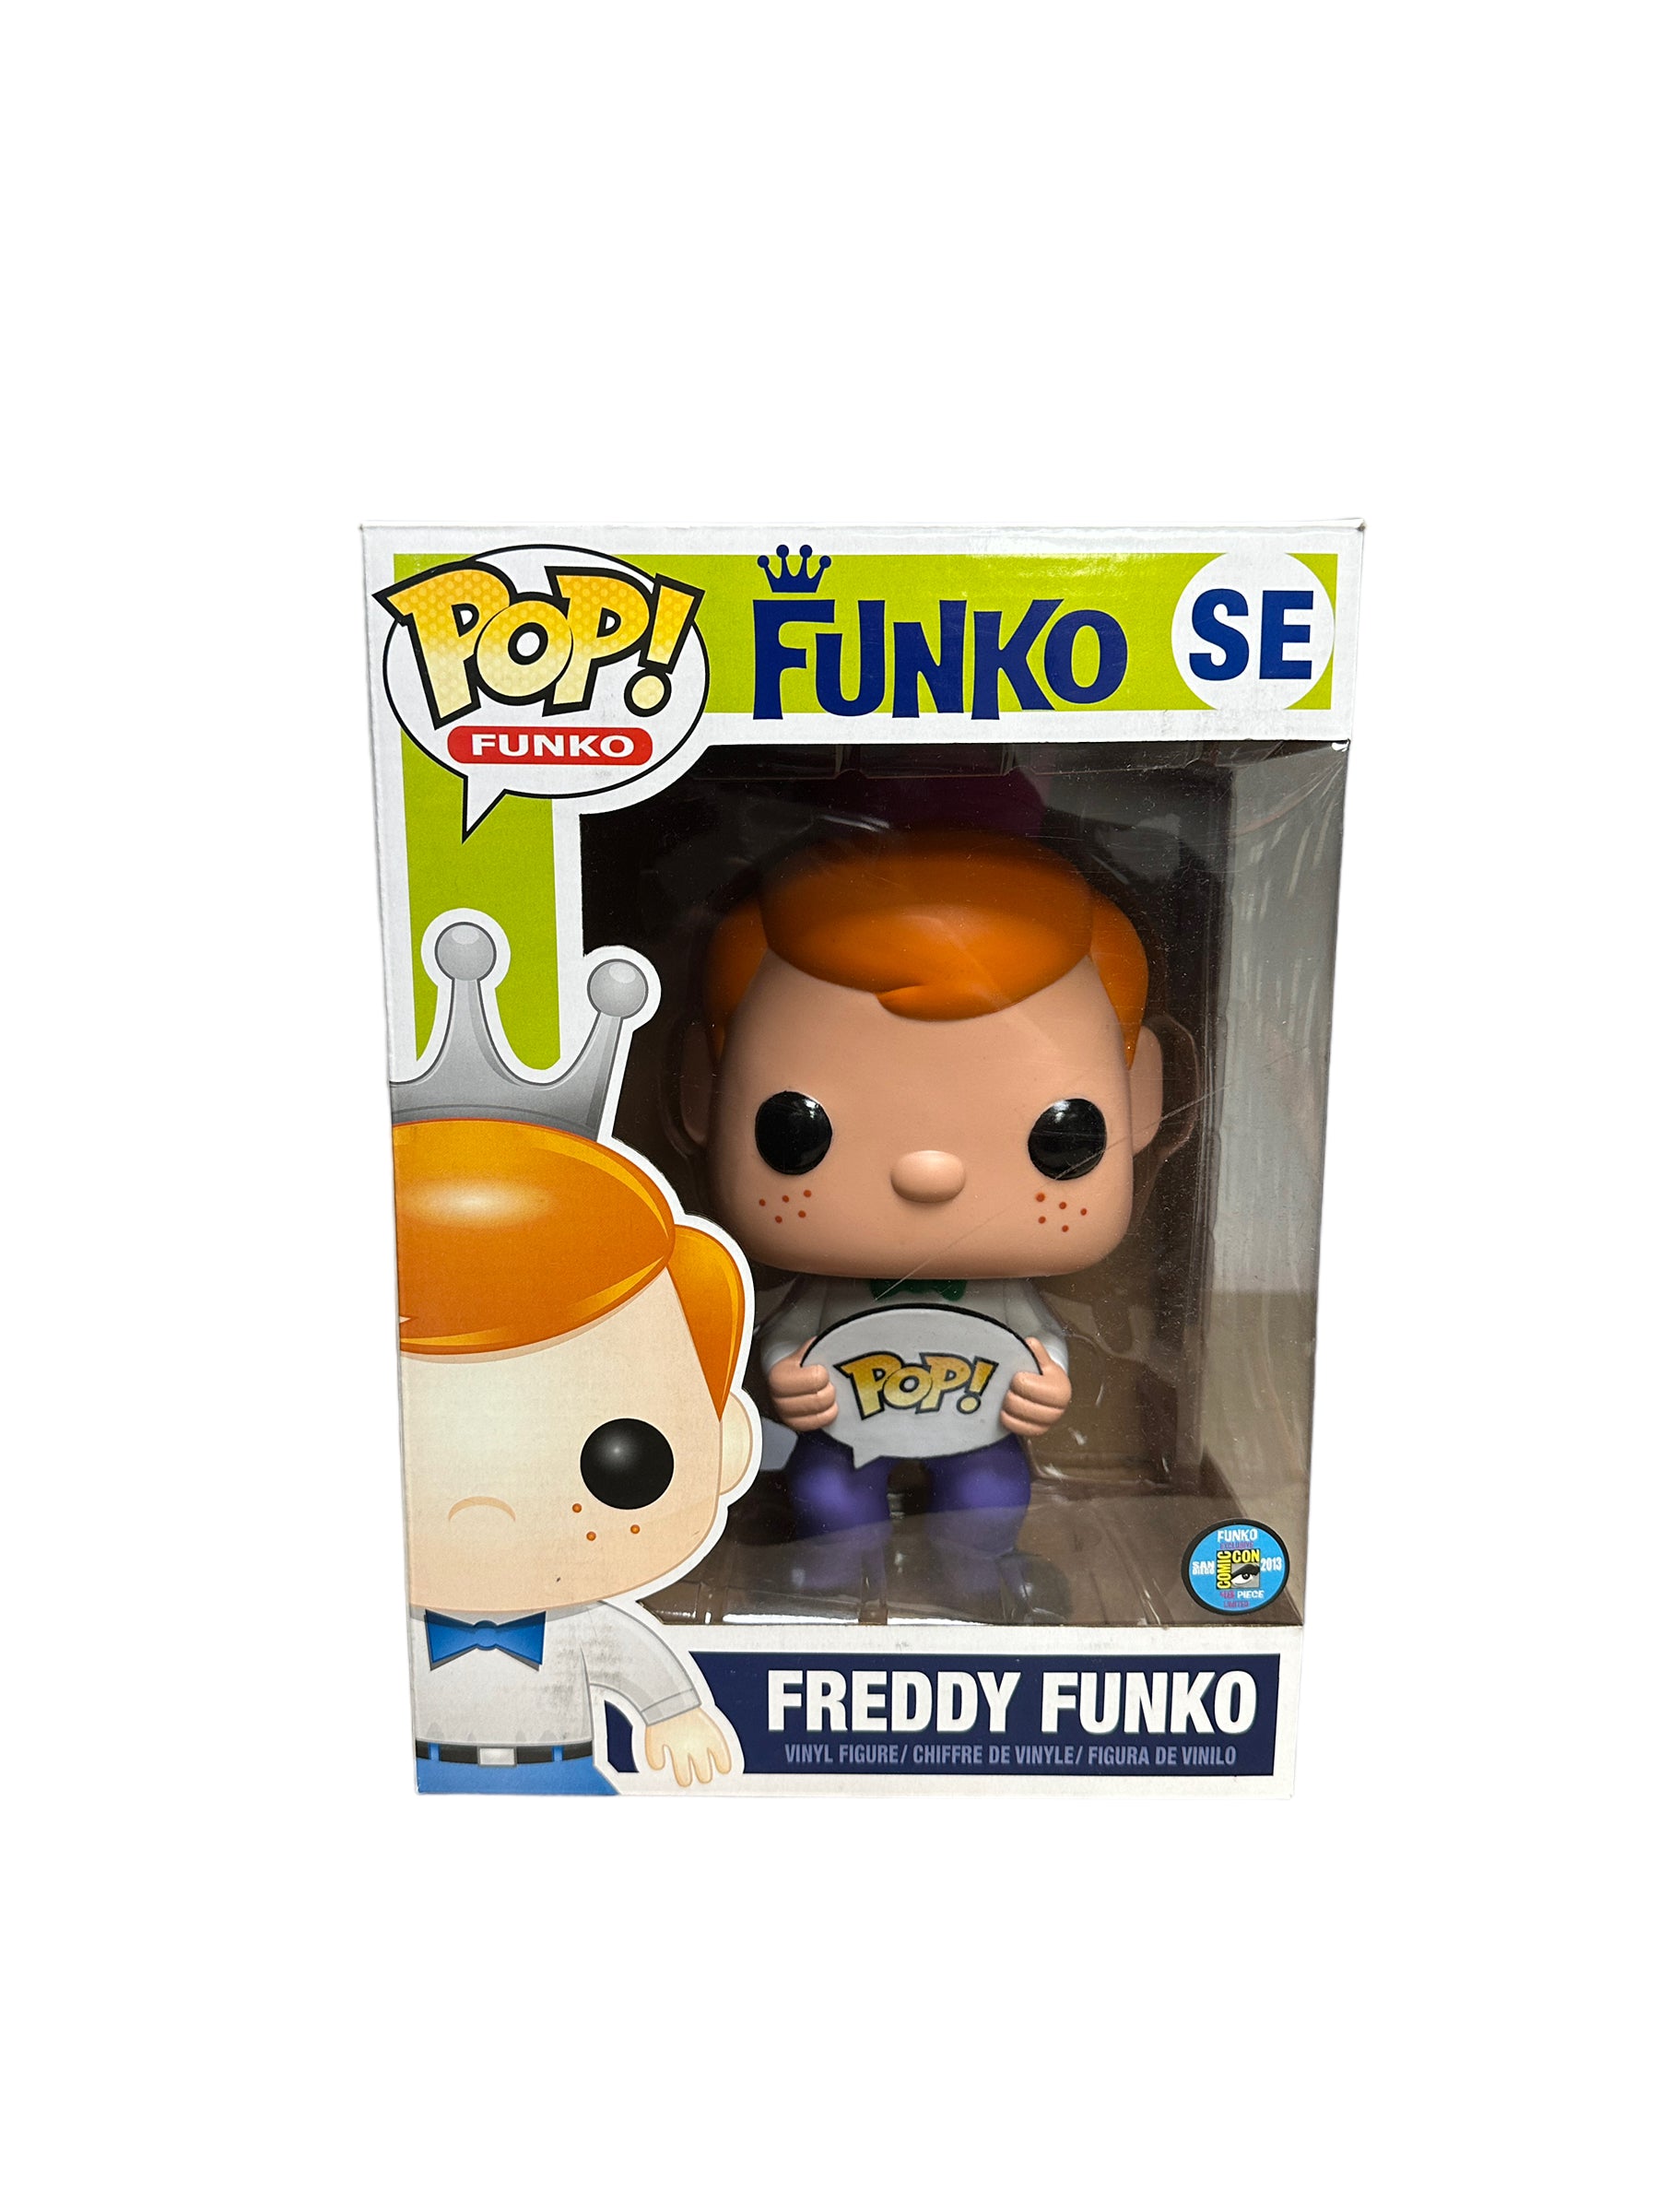 Freddy Funko Orange Hair 9" Funko Pop! - SDCC 2013 Exclusive LE48 Pcs - Condition 8.5/10